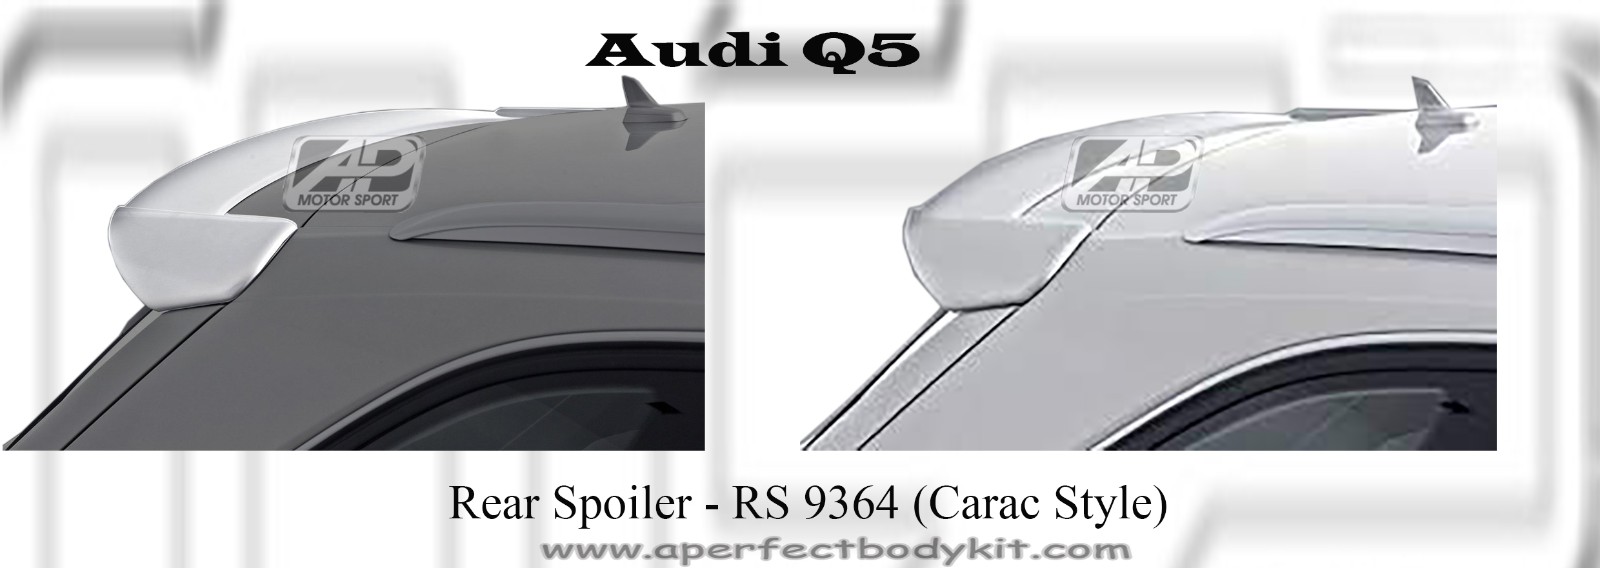 Audi Q5 Rear Spoiler (Carac Style) 